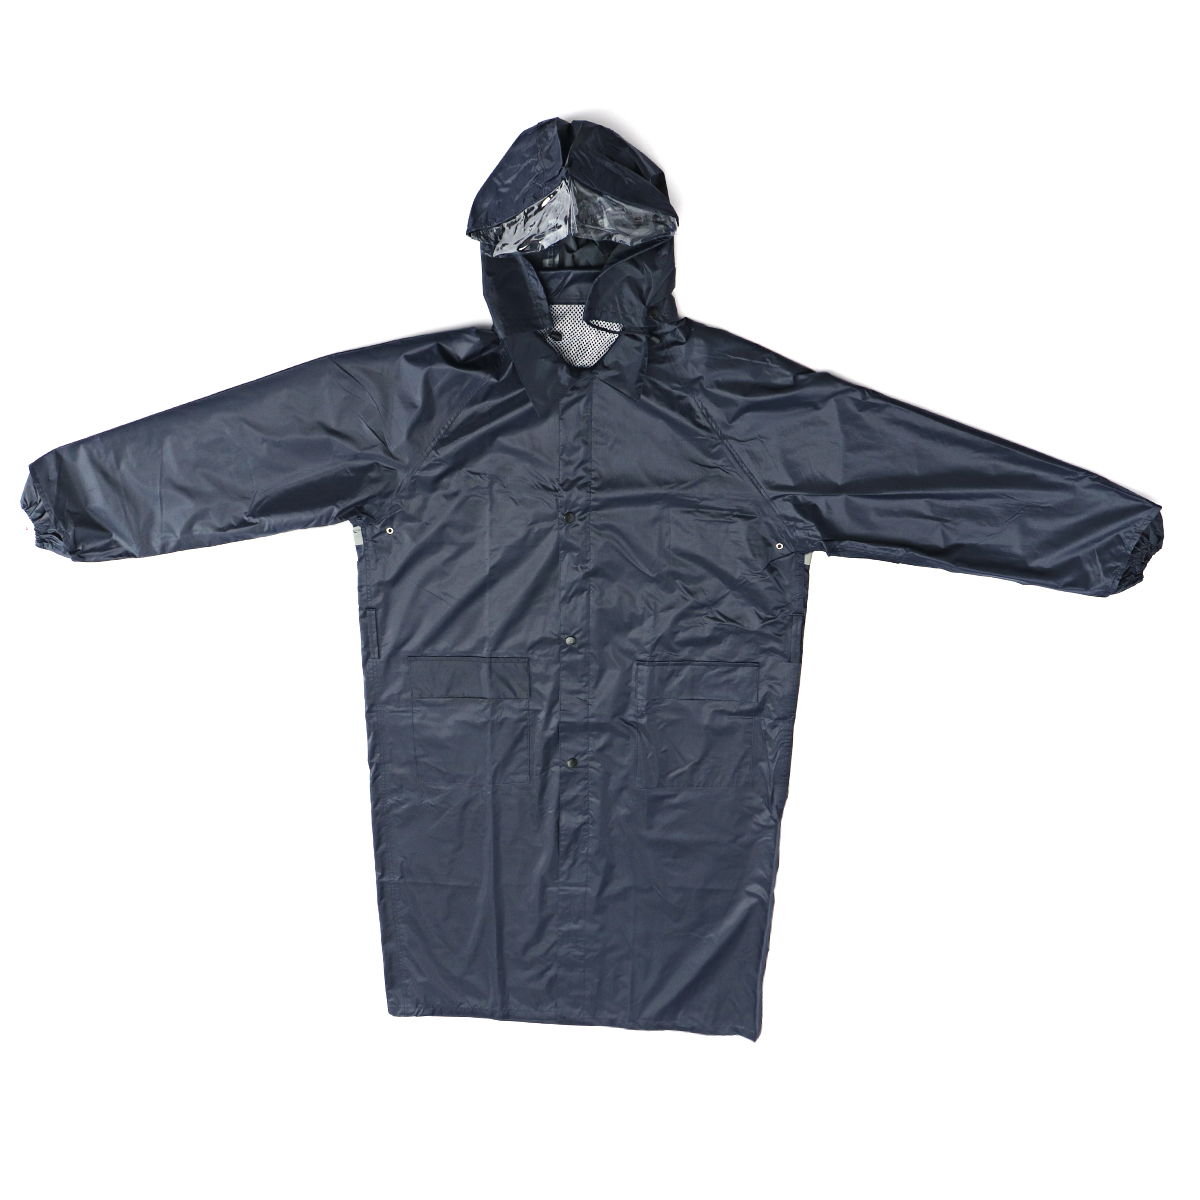 Hooded Raincoat Waterproof Lightweight Rain Jacket Outdoor Cape Coat Raincover